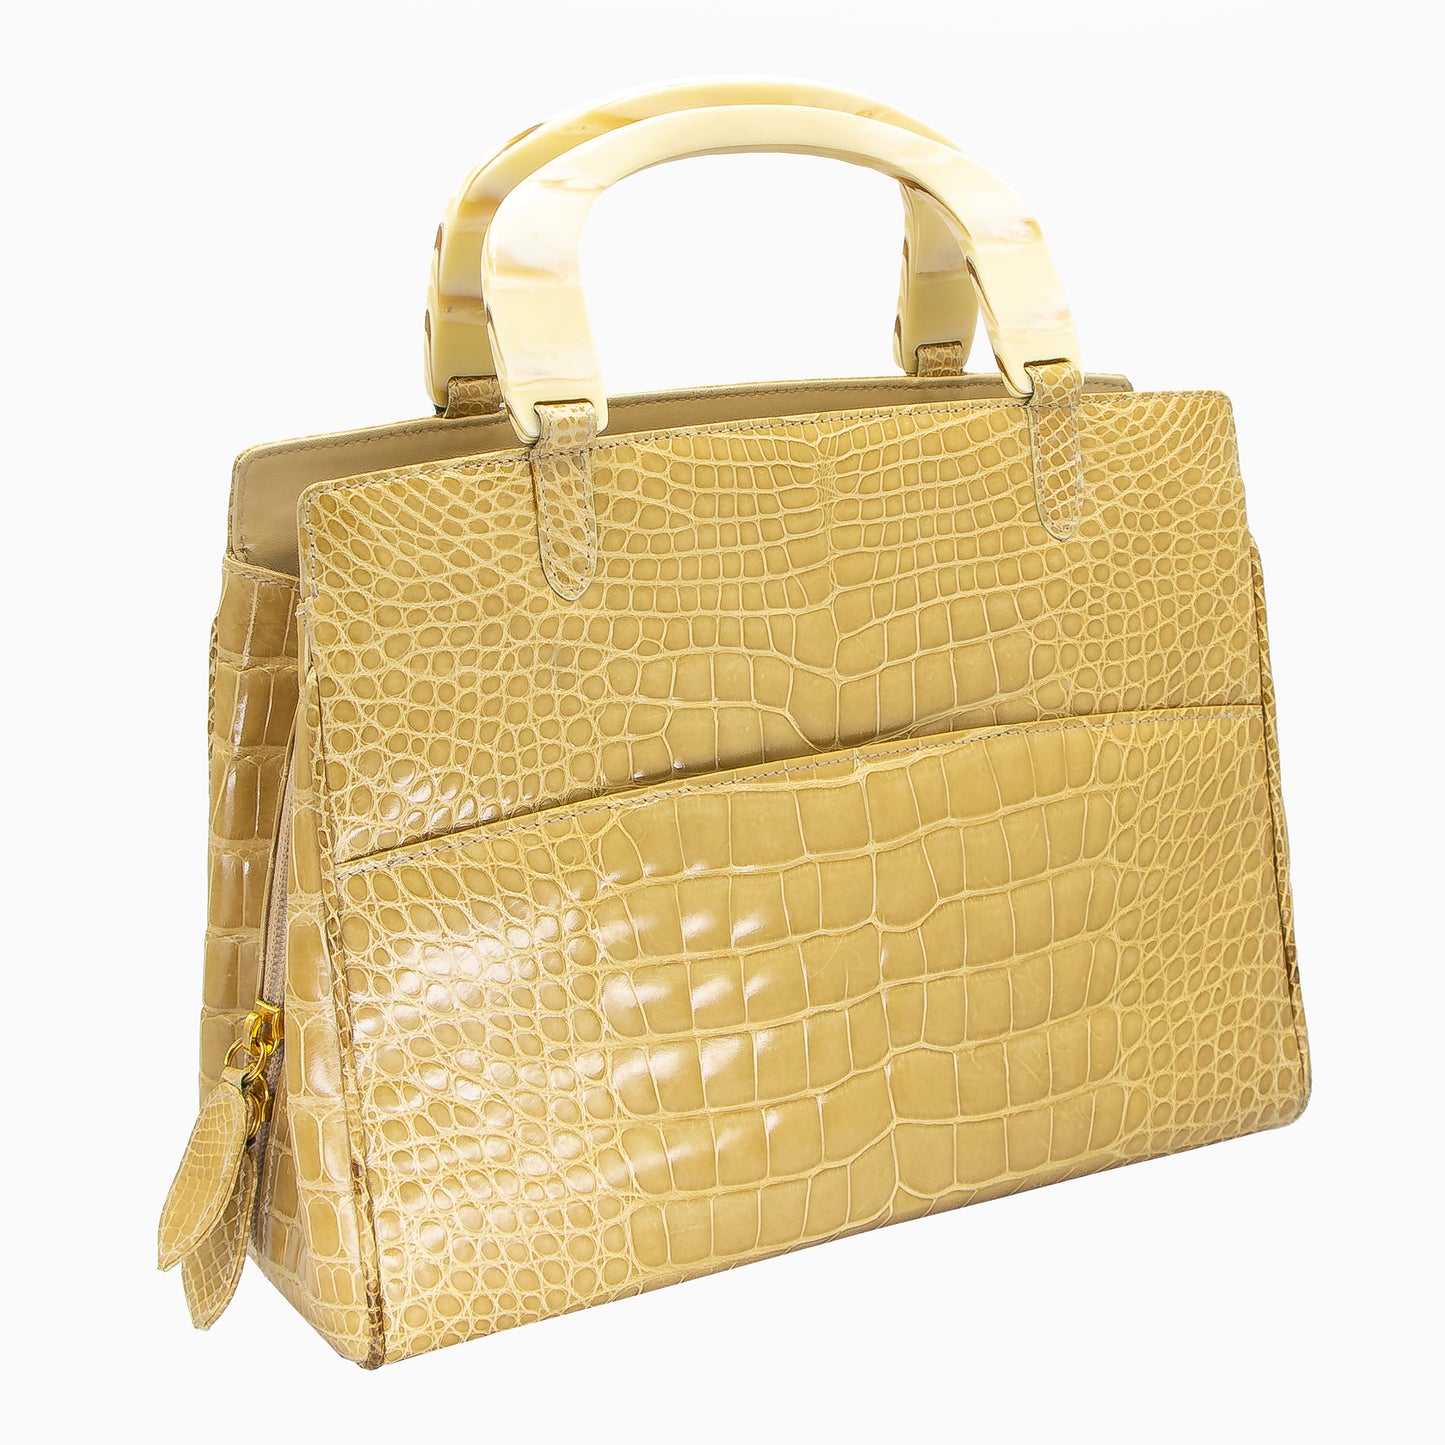 Lana Marks Tan Crocodile Handbag